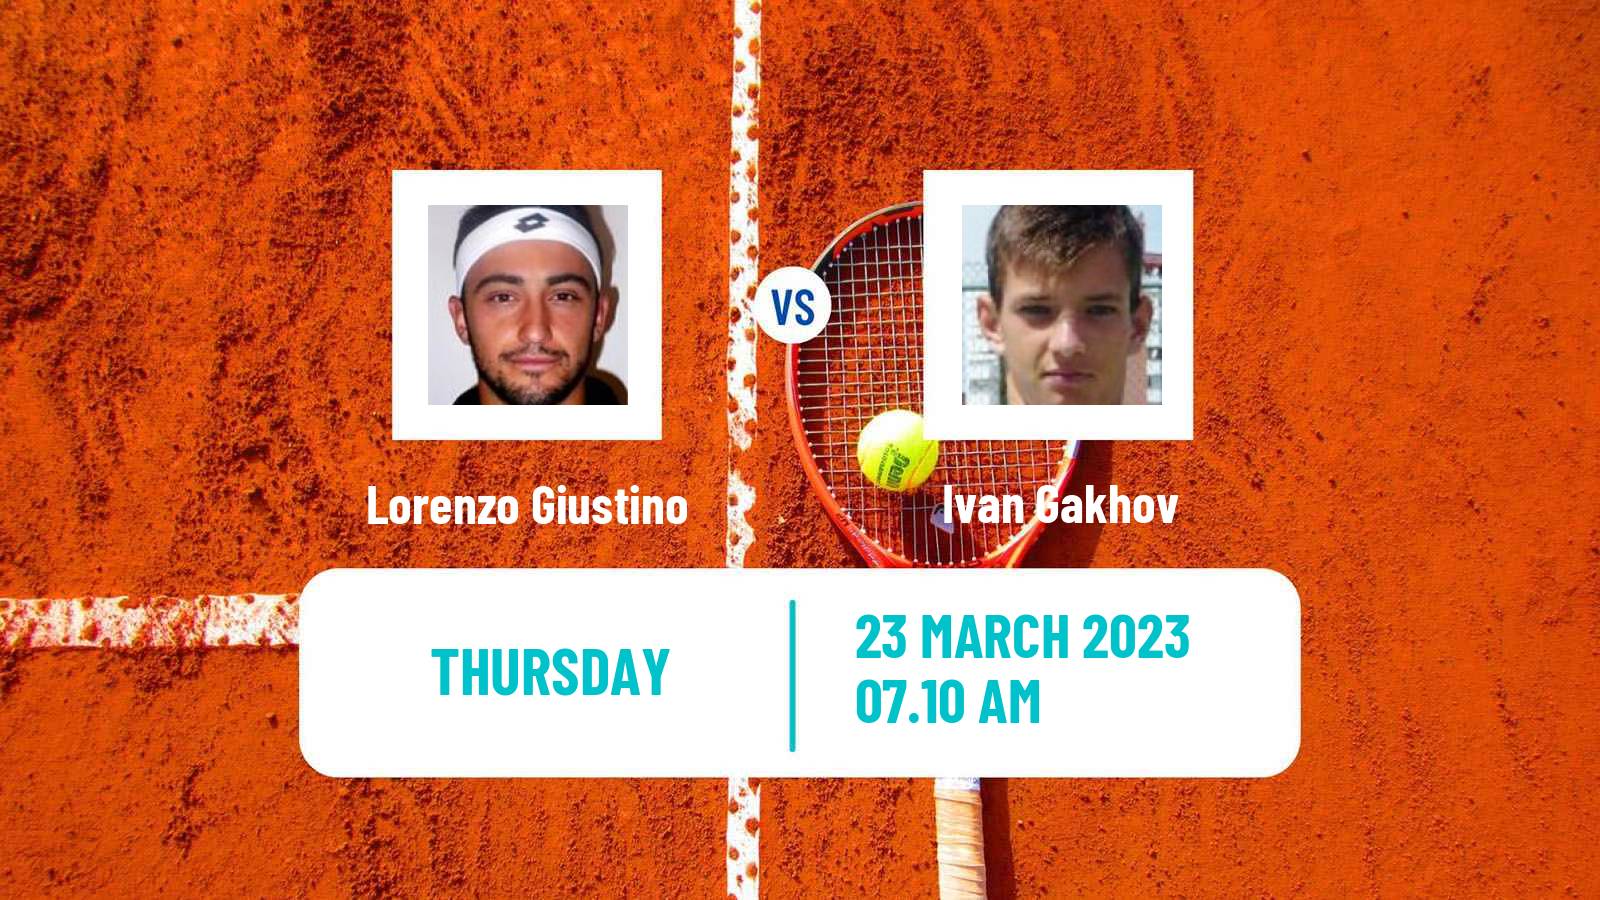 Tennis ATP Challenger Lorenzo Giustino - Ivan Gakhov